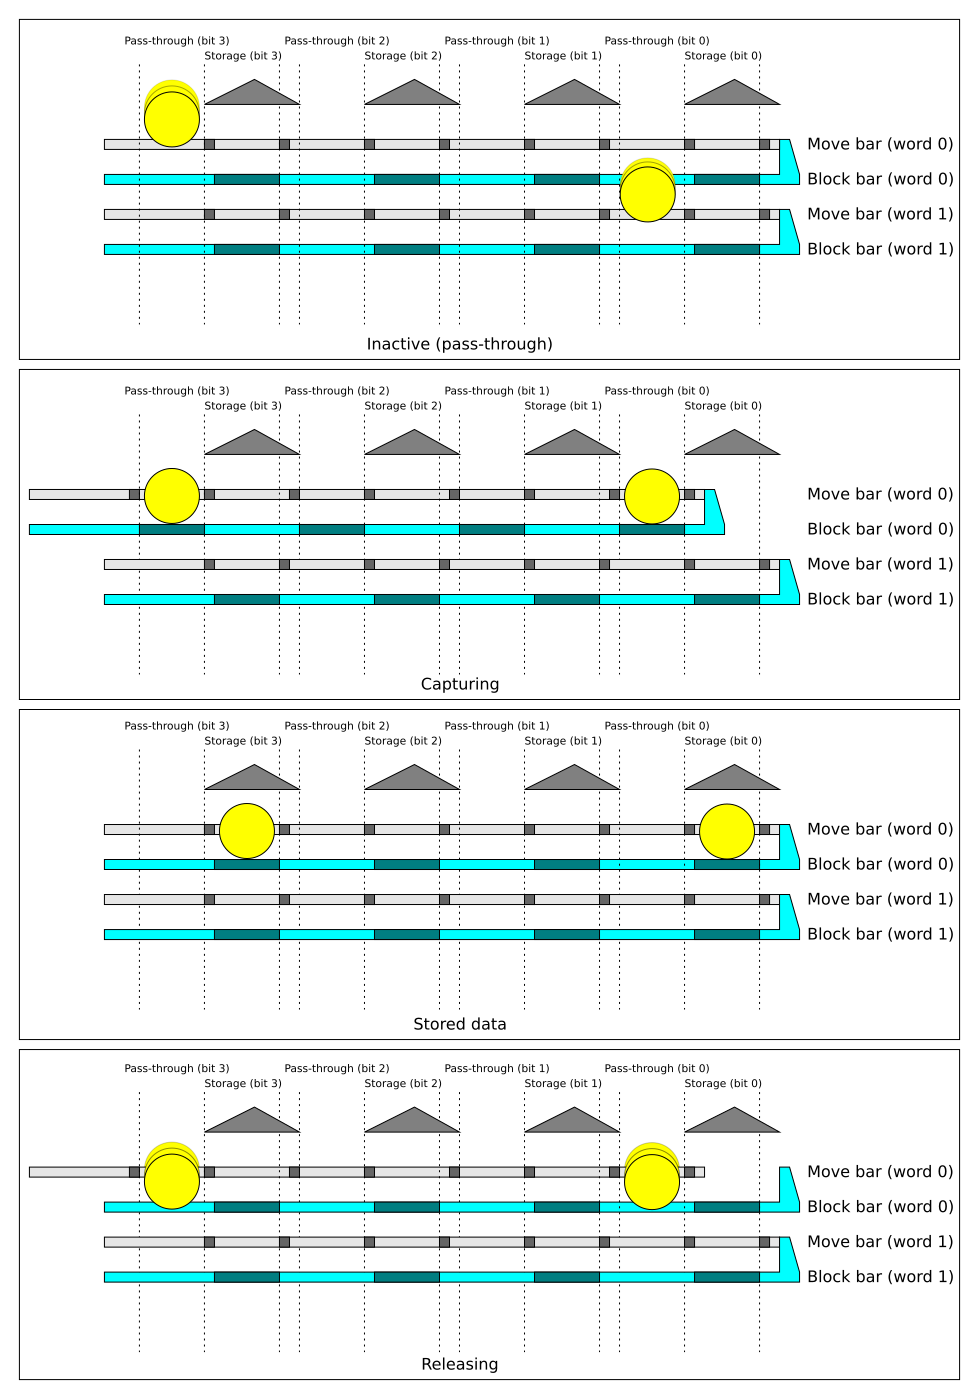 Memory schematic